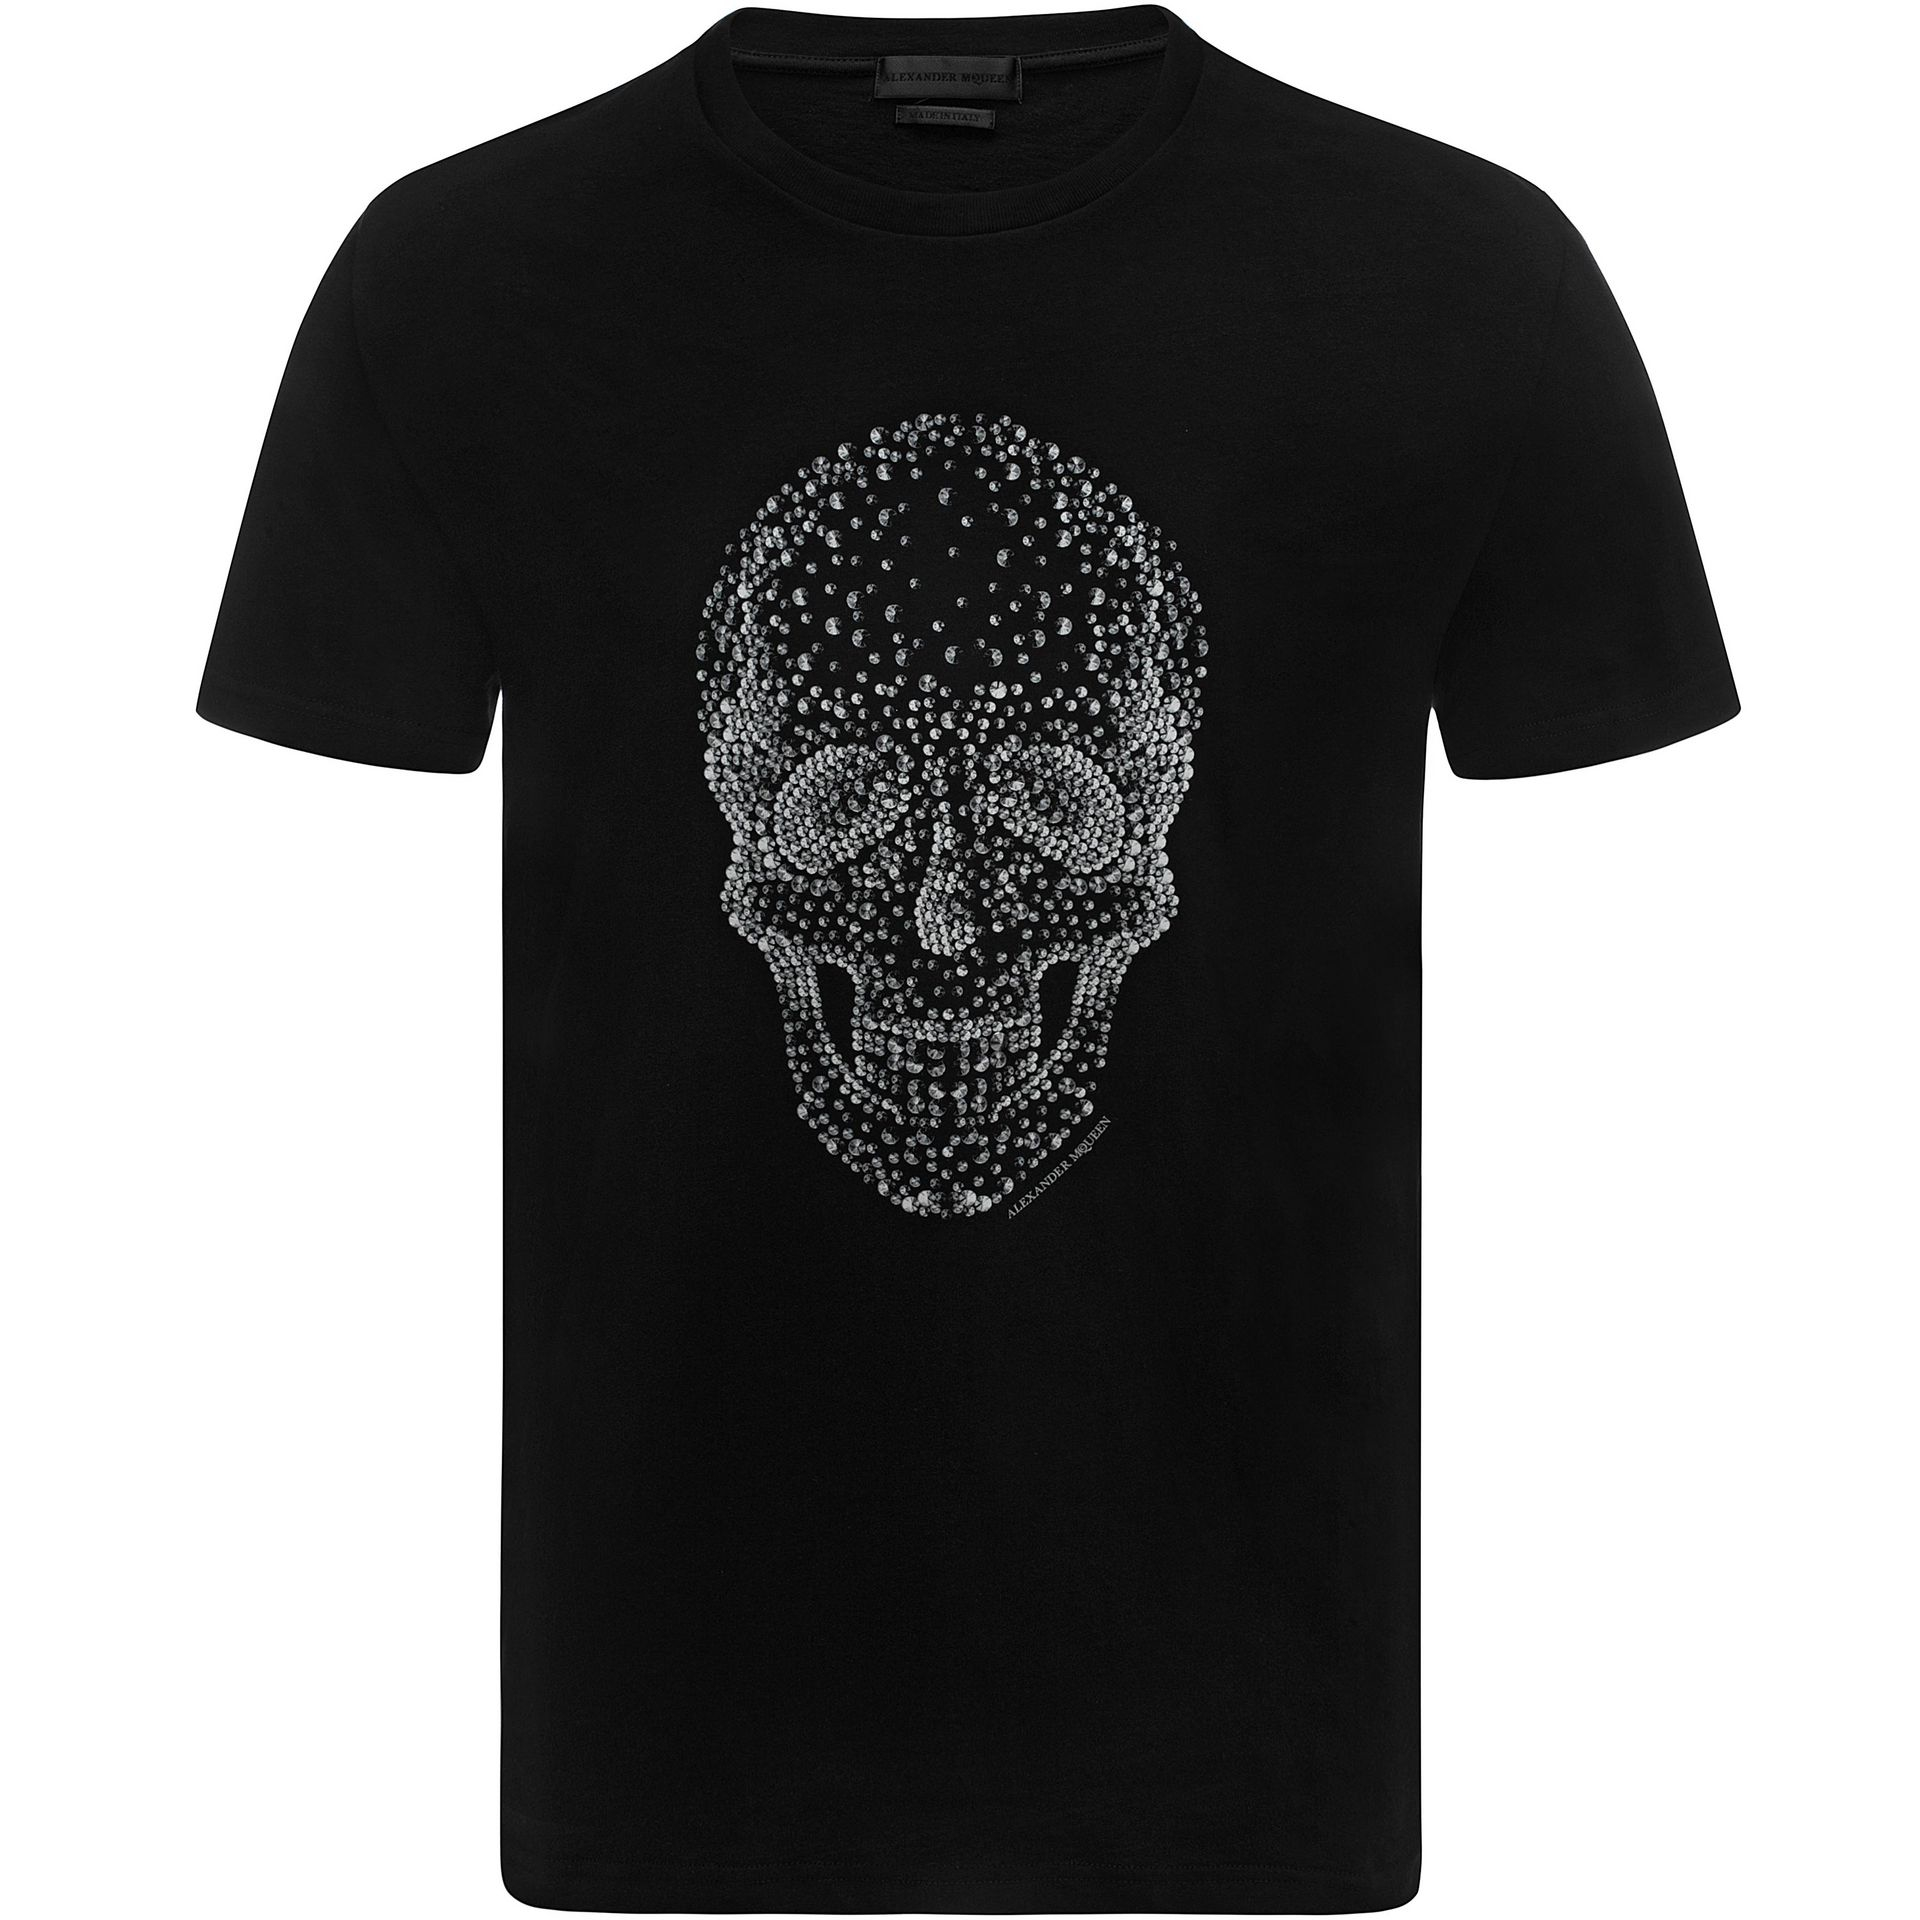 Alexander mcqueen Embroidered Skull T-shirt in Black for Men - Save 40% ...